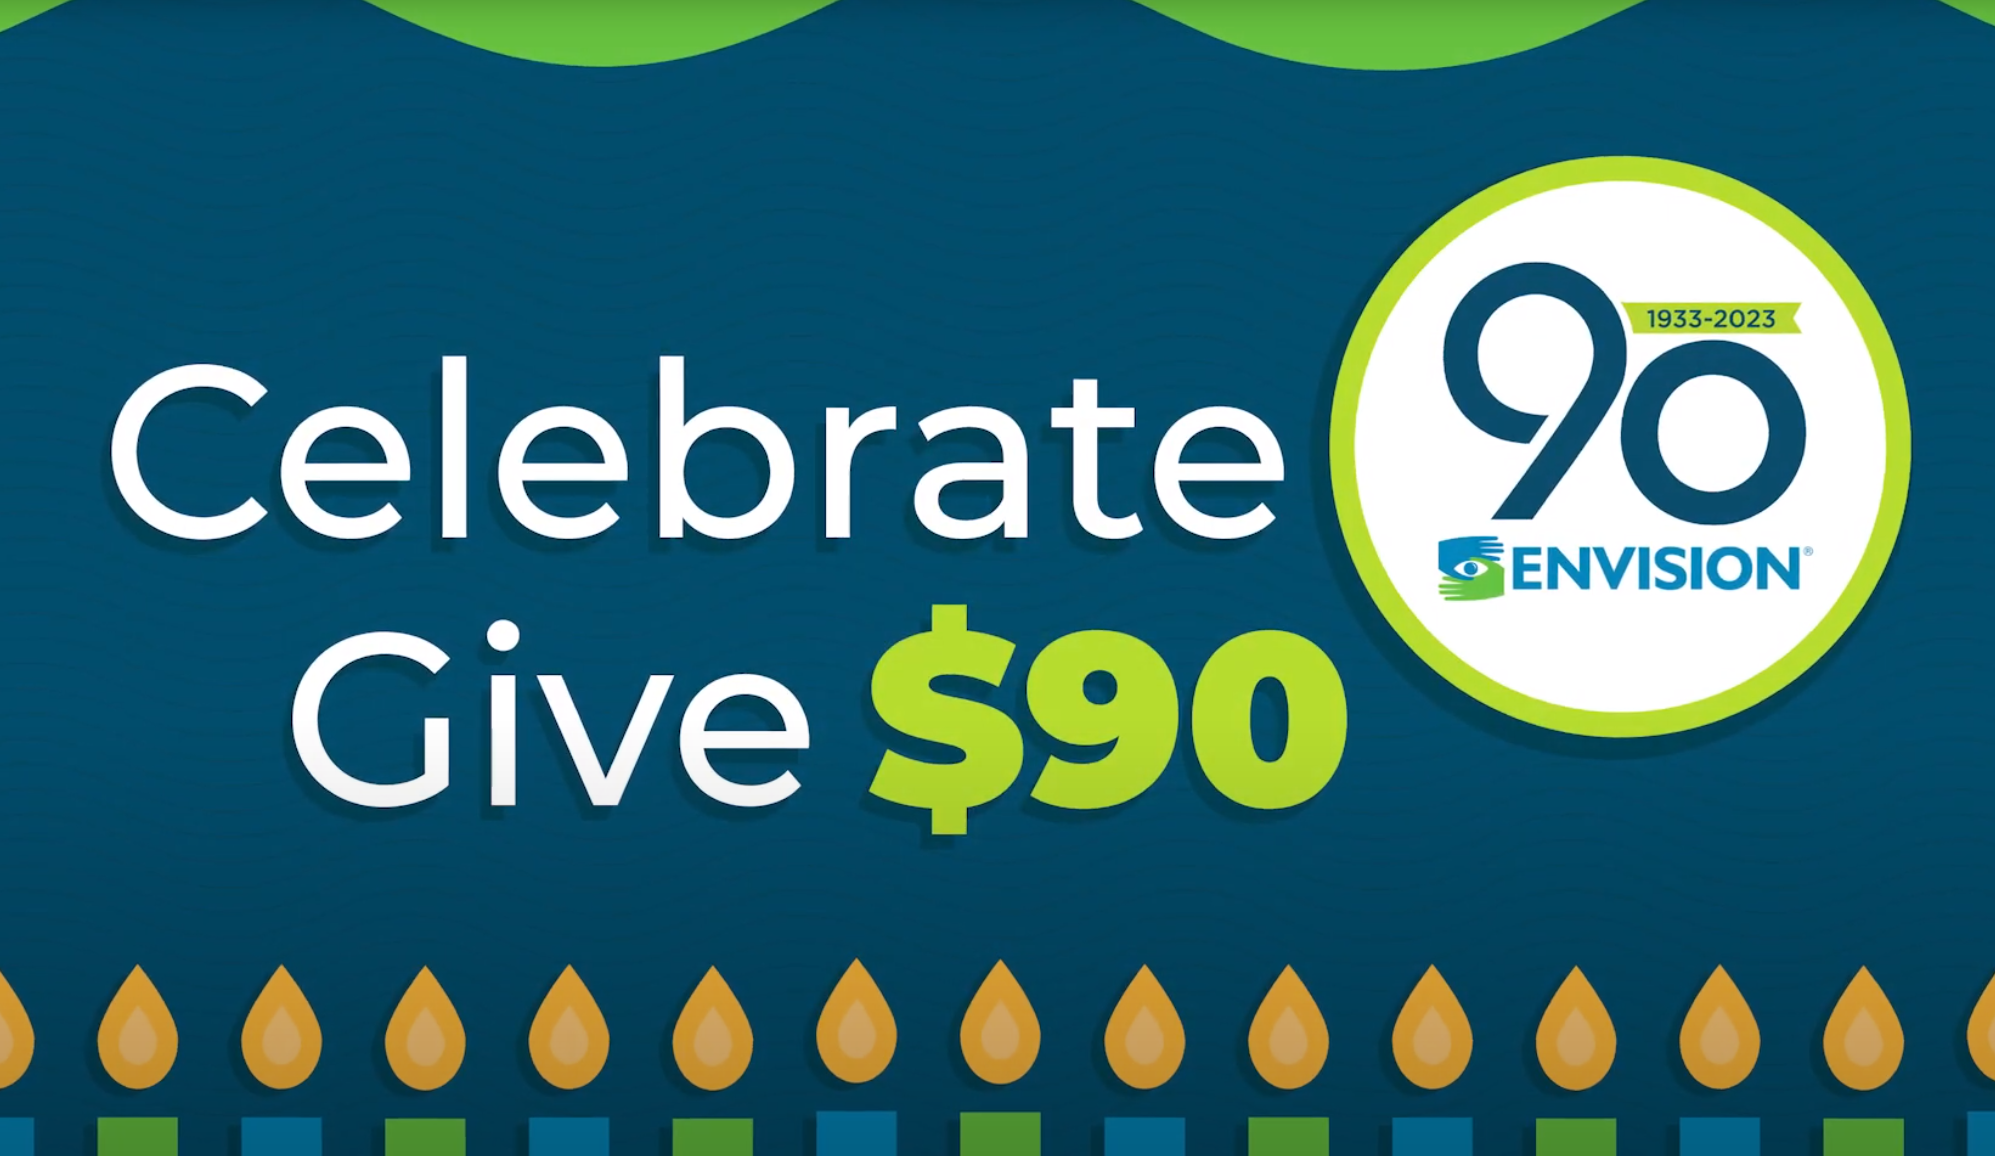 Celebrate 90th give $90 video